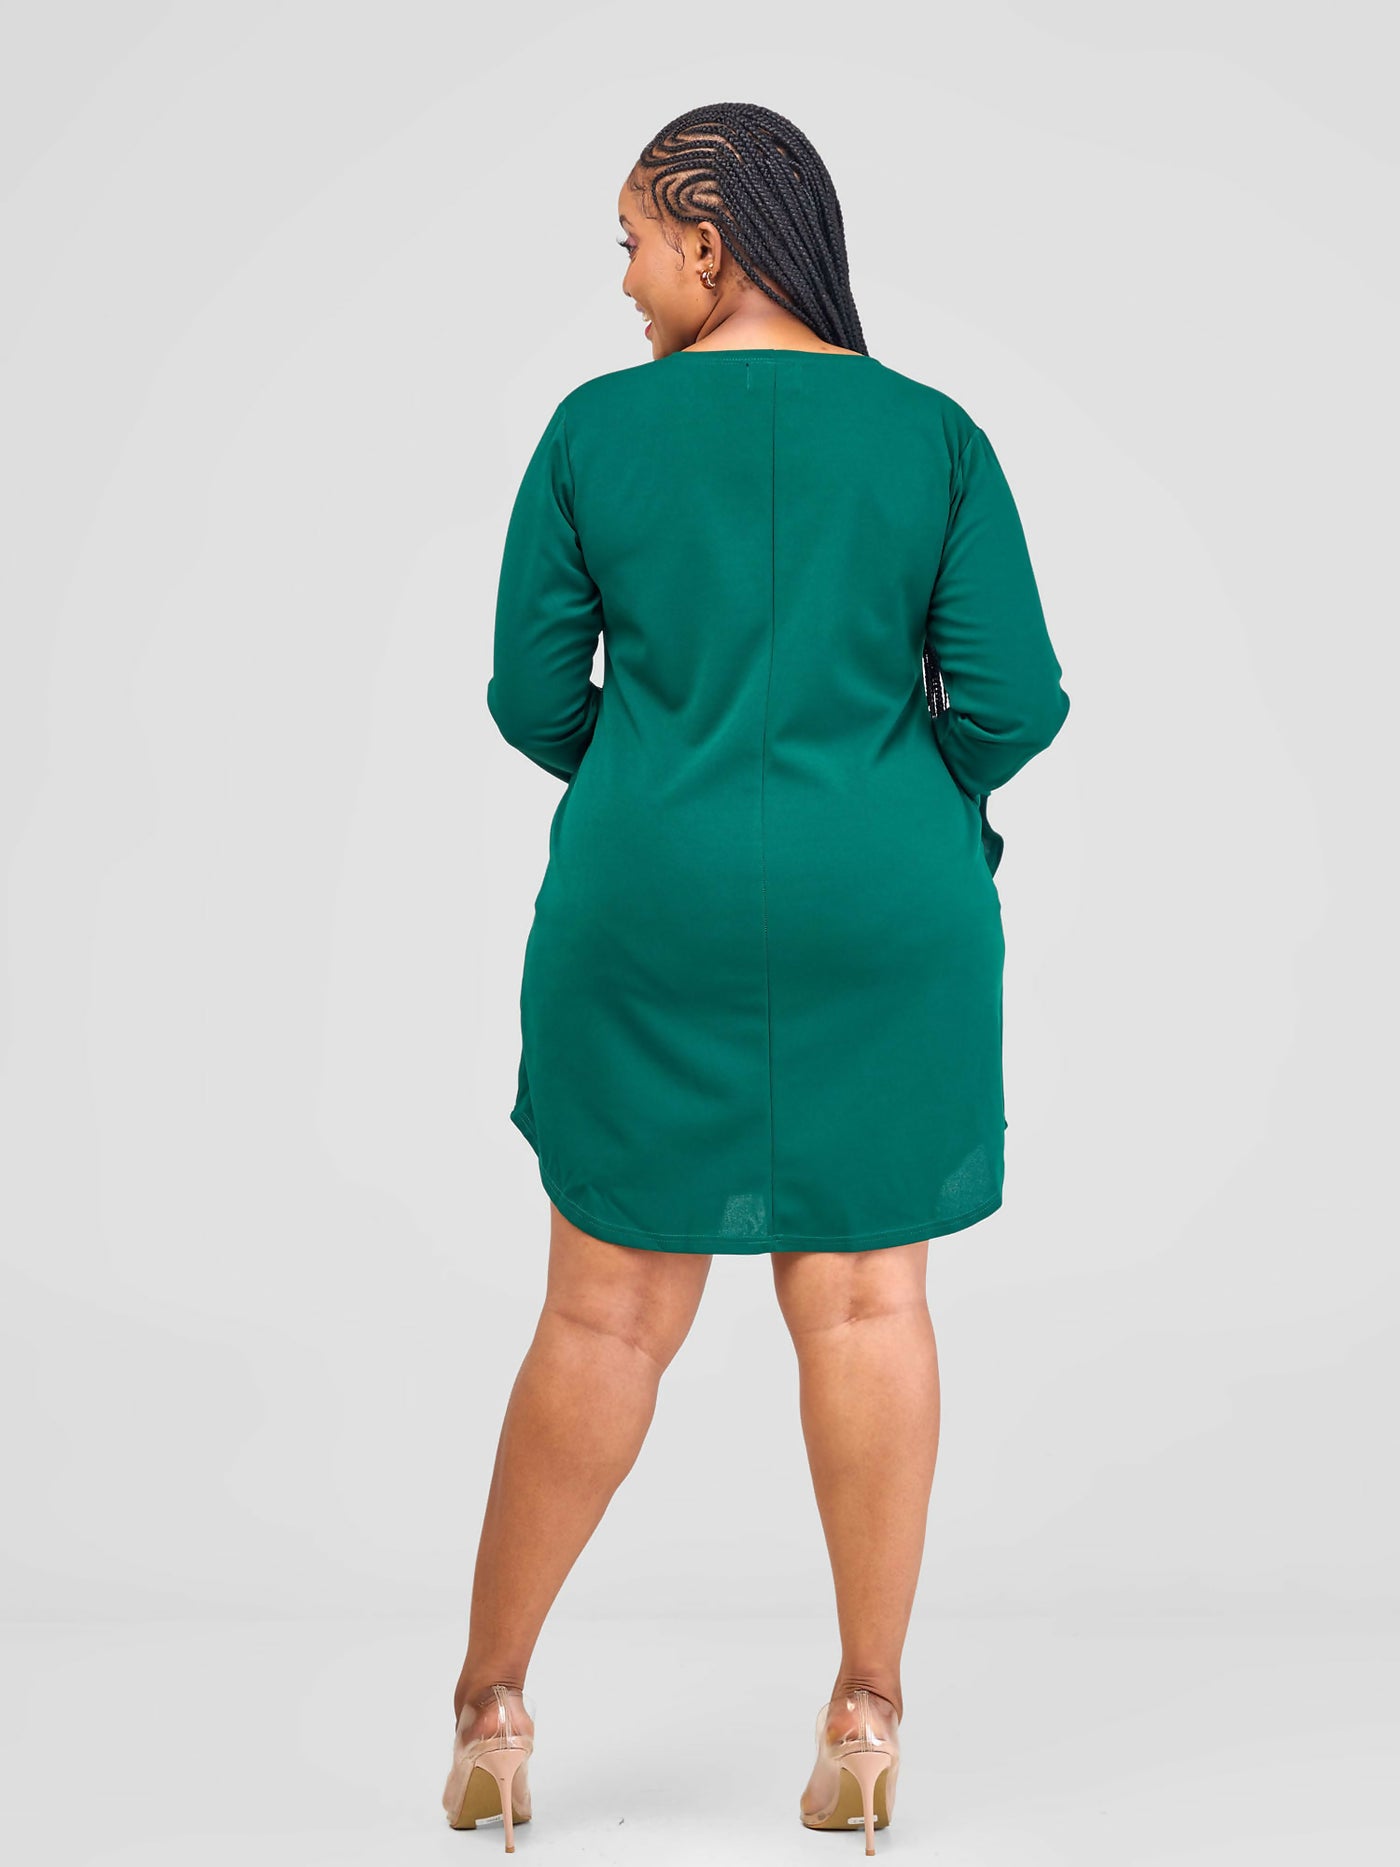 Lizola Barbra Shift Dress - Green - Shopzetu